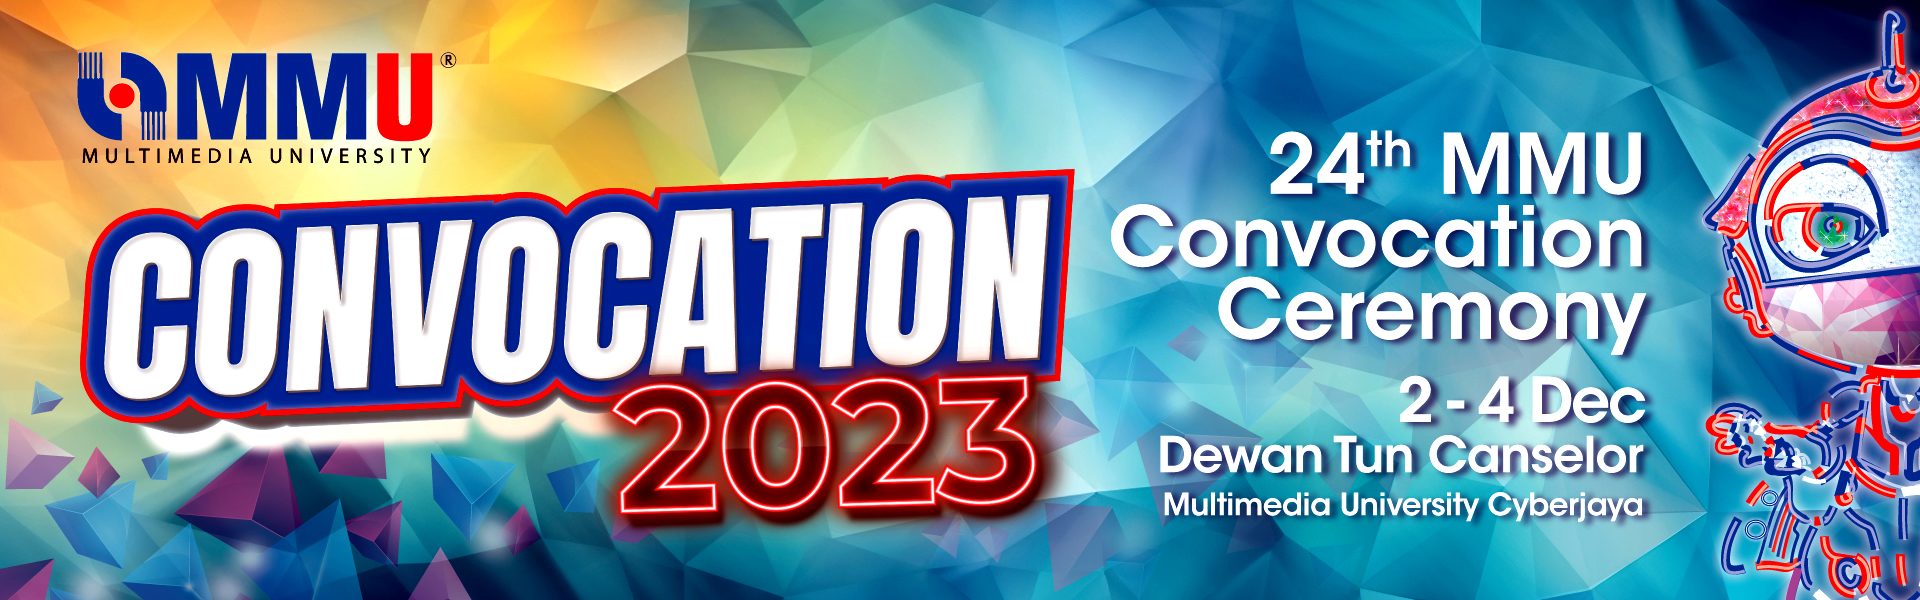 Multimedia University Convocation 2023